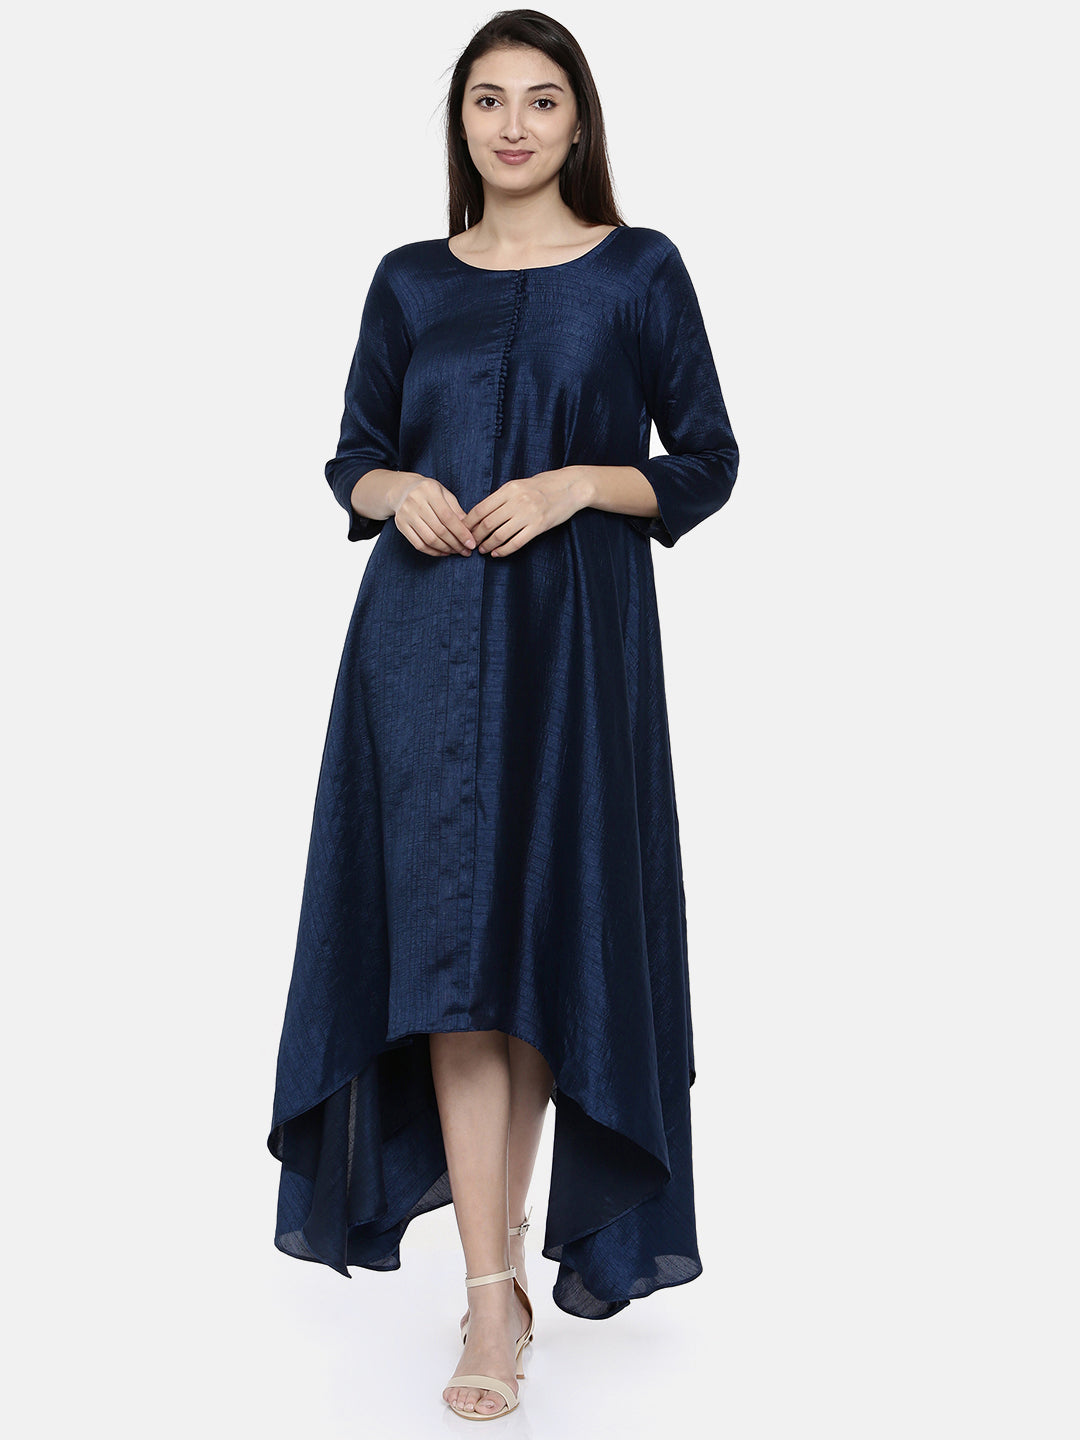 Potli Blue Classic Dress - AS0132 - Asmi Shop